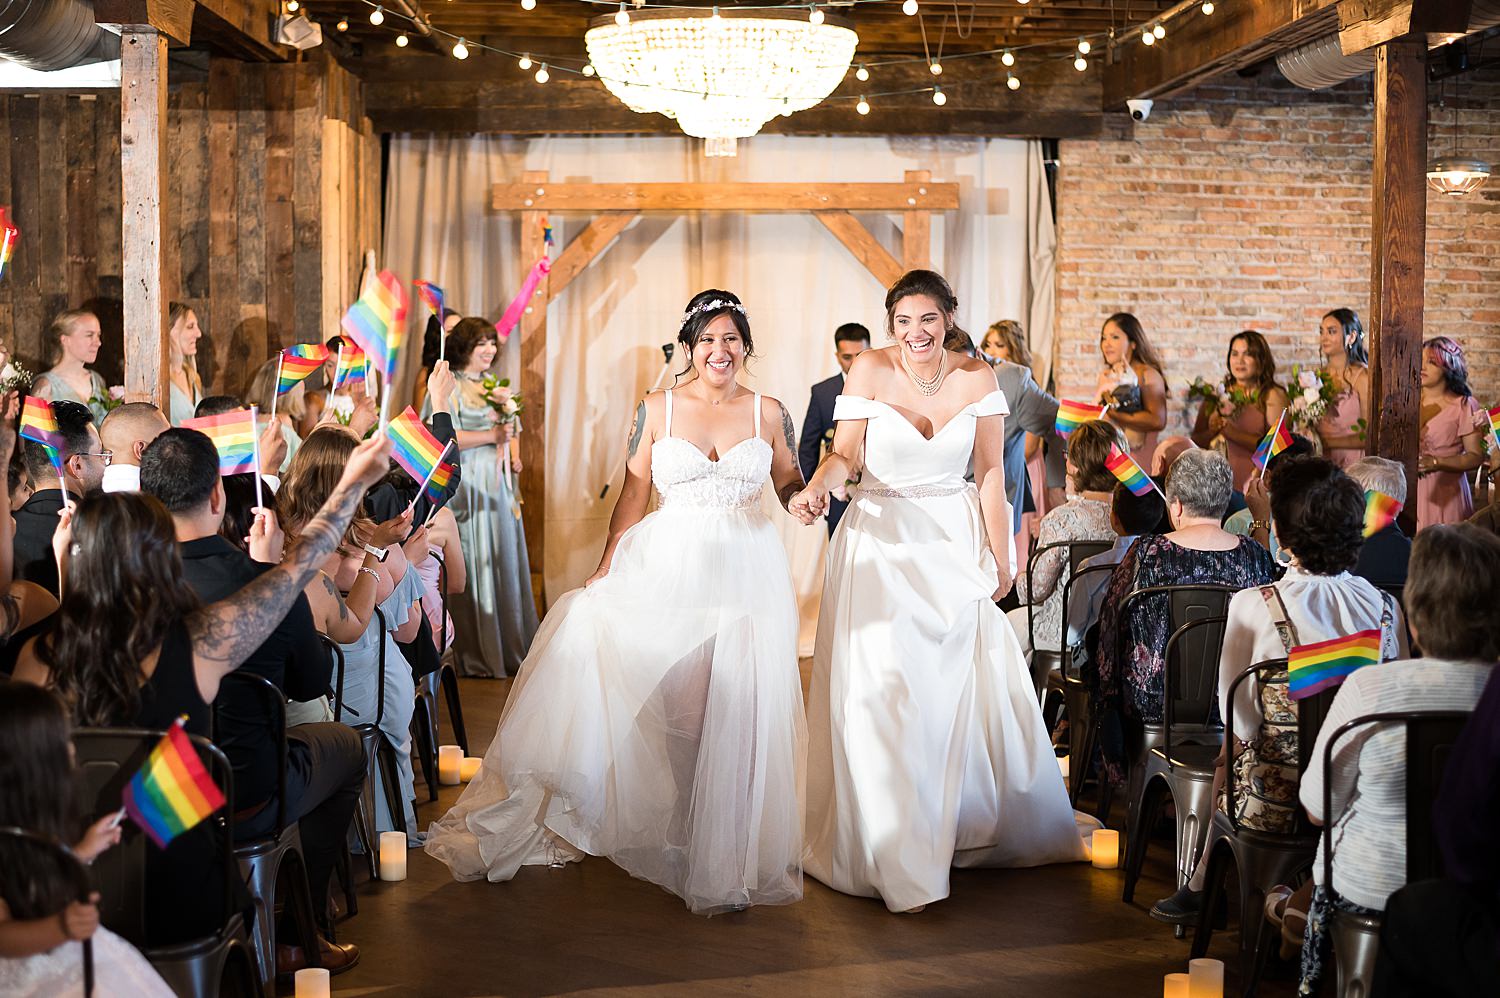 Rainbow flags waving as brides walk down wedding aisle at The Haight.